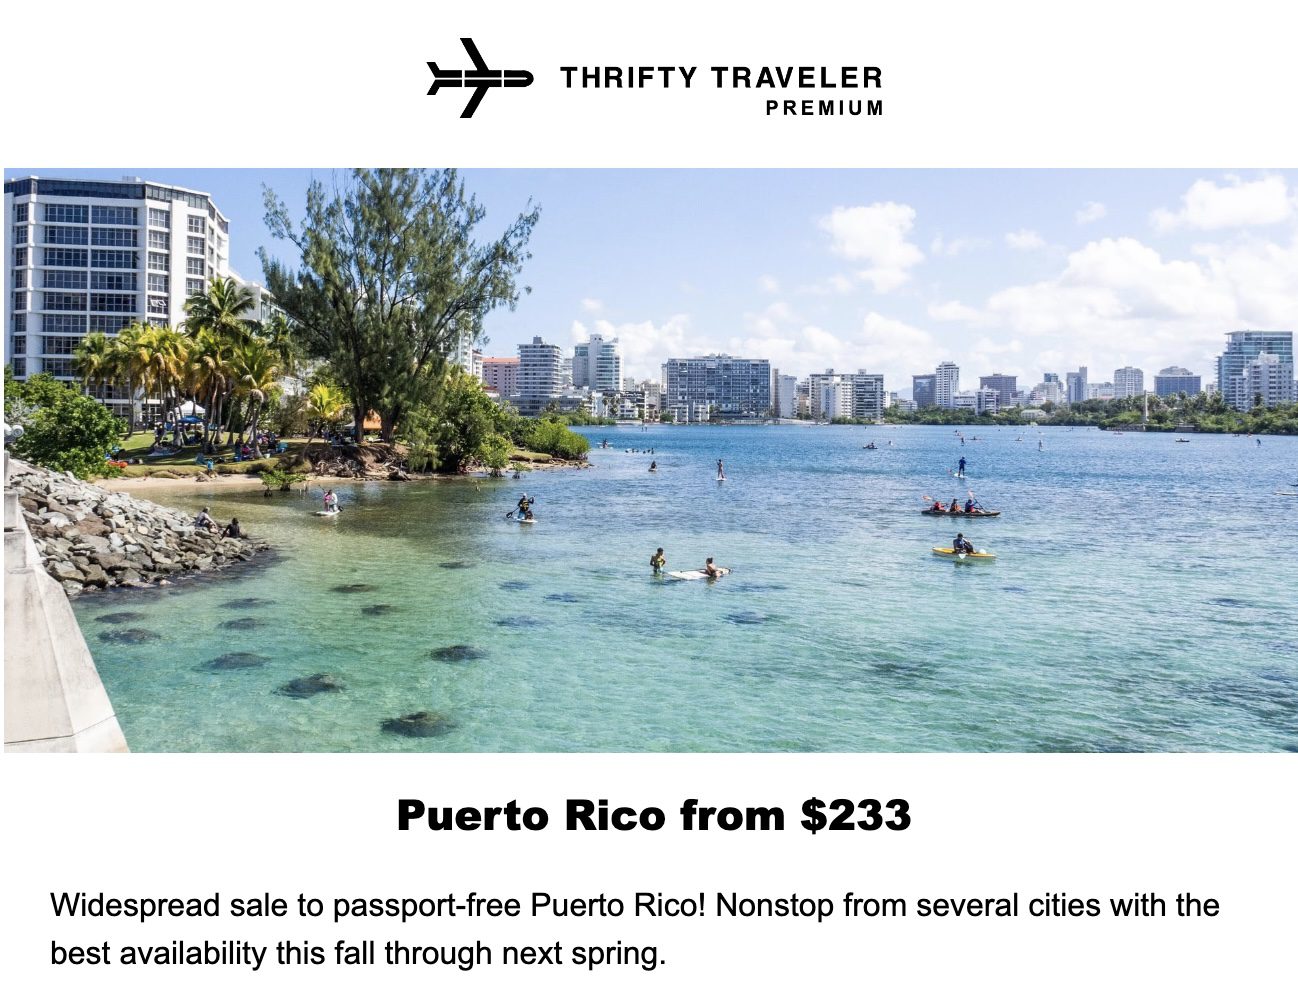 Cheap flights to Puerto Rico